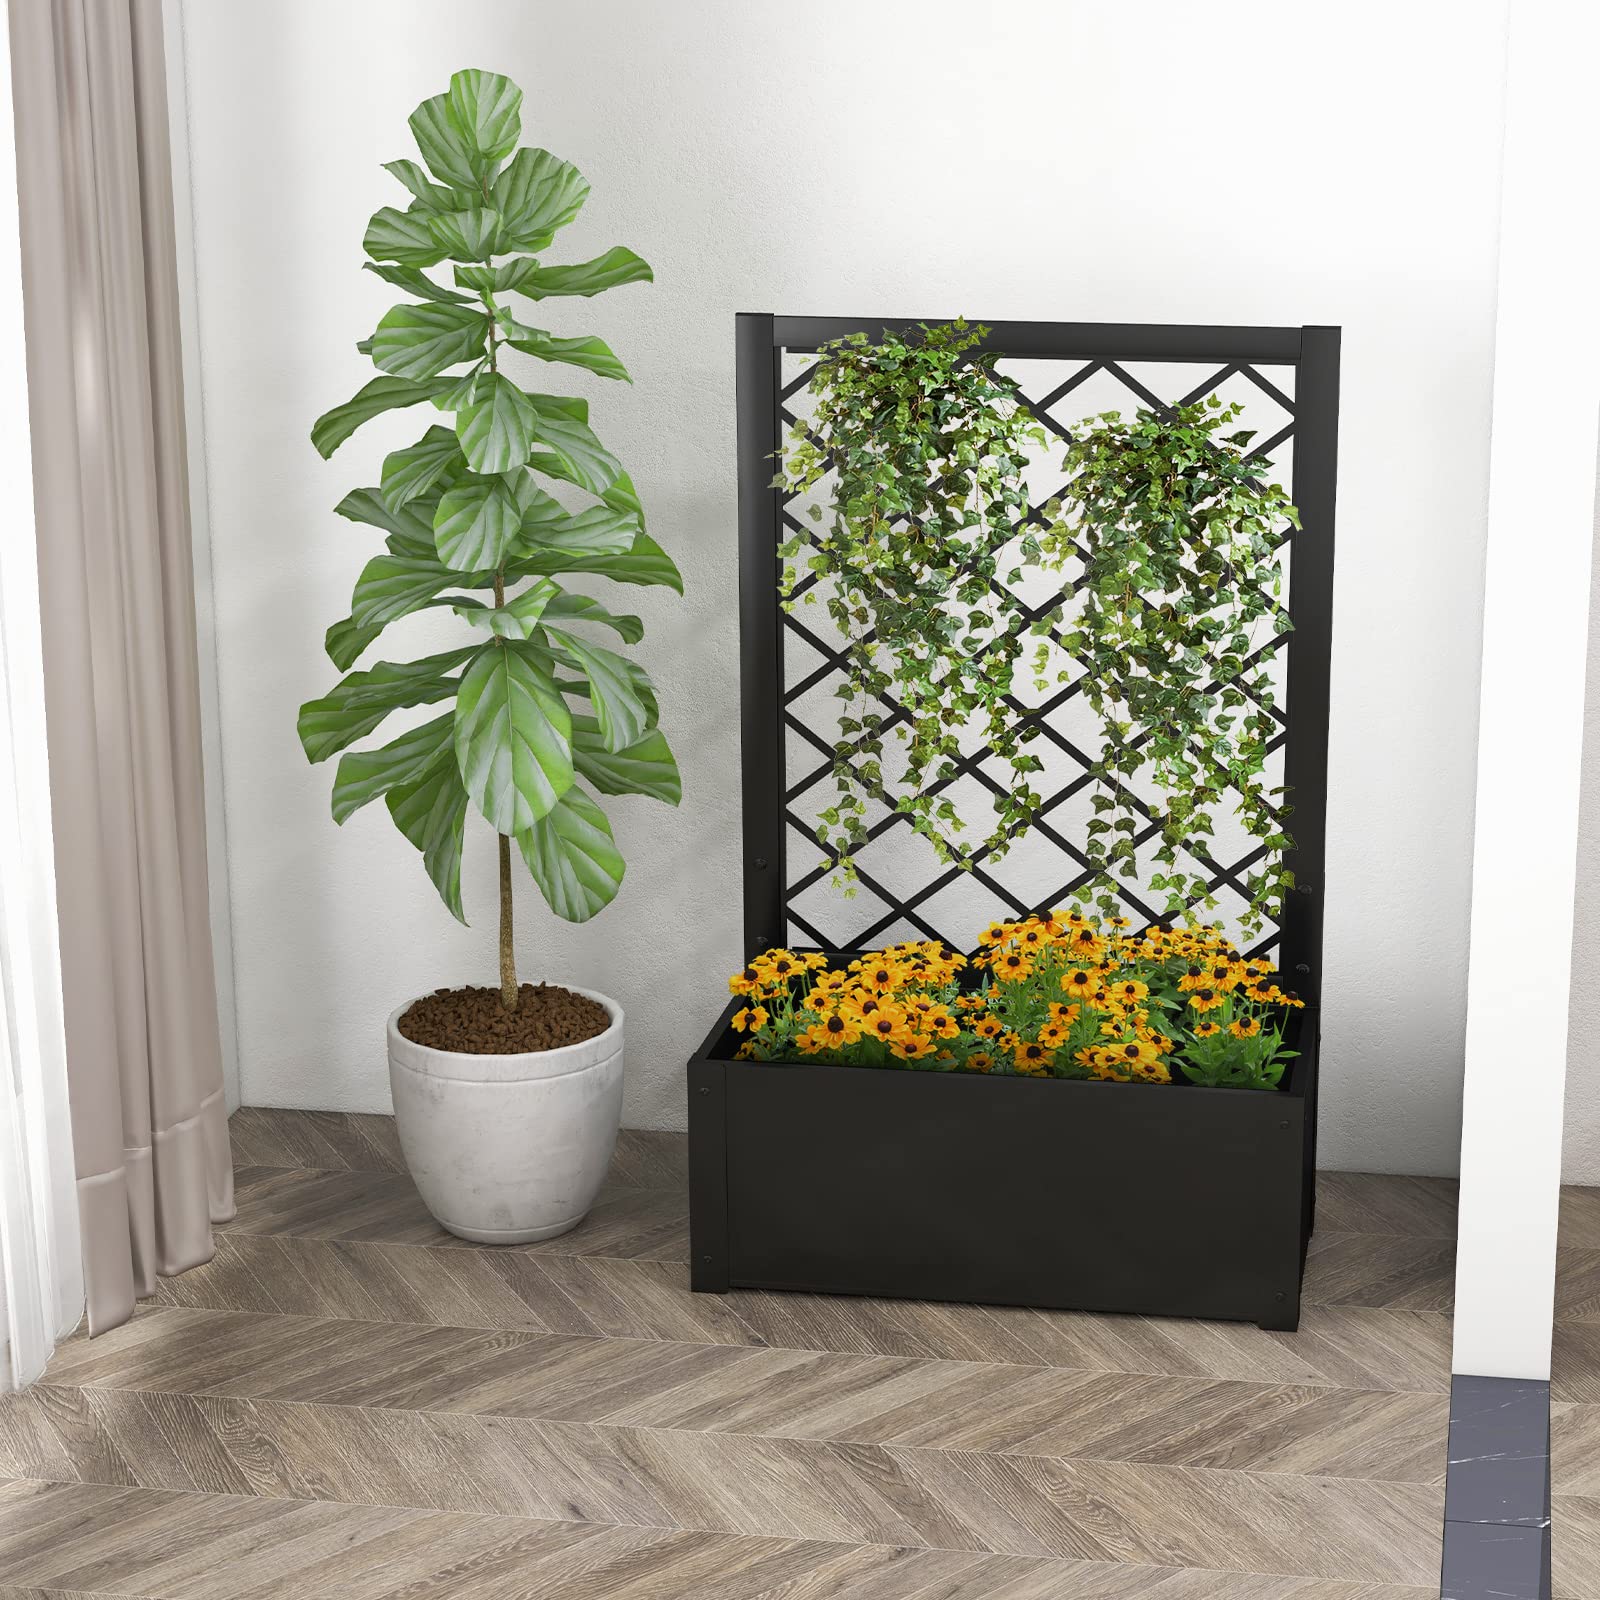 Giantex Raised Garden Bed with Trellis, 49" Metal Vertical Planter with Garden Trellis